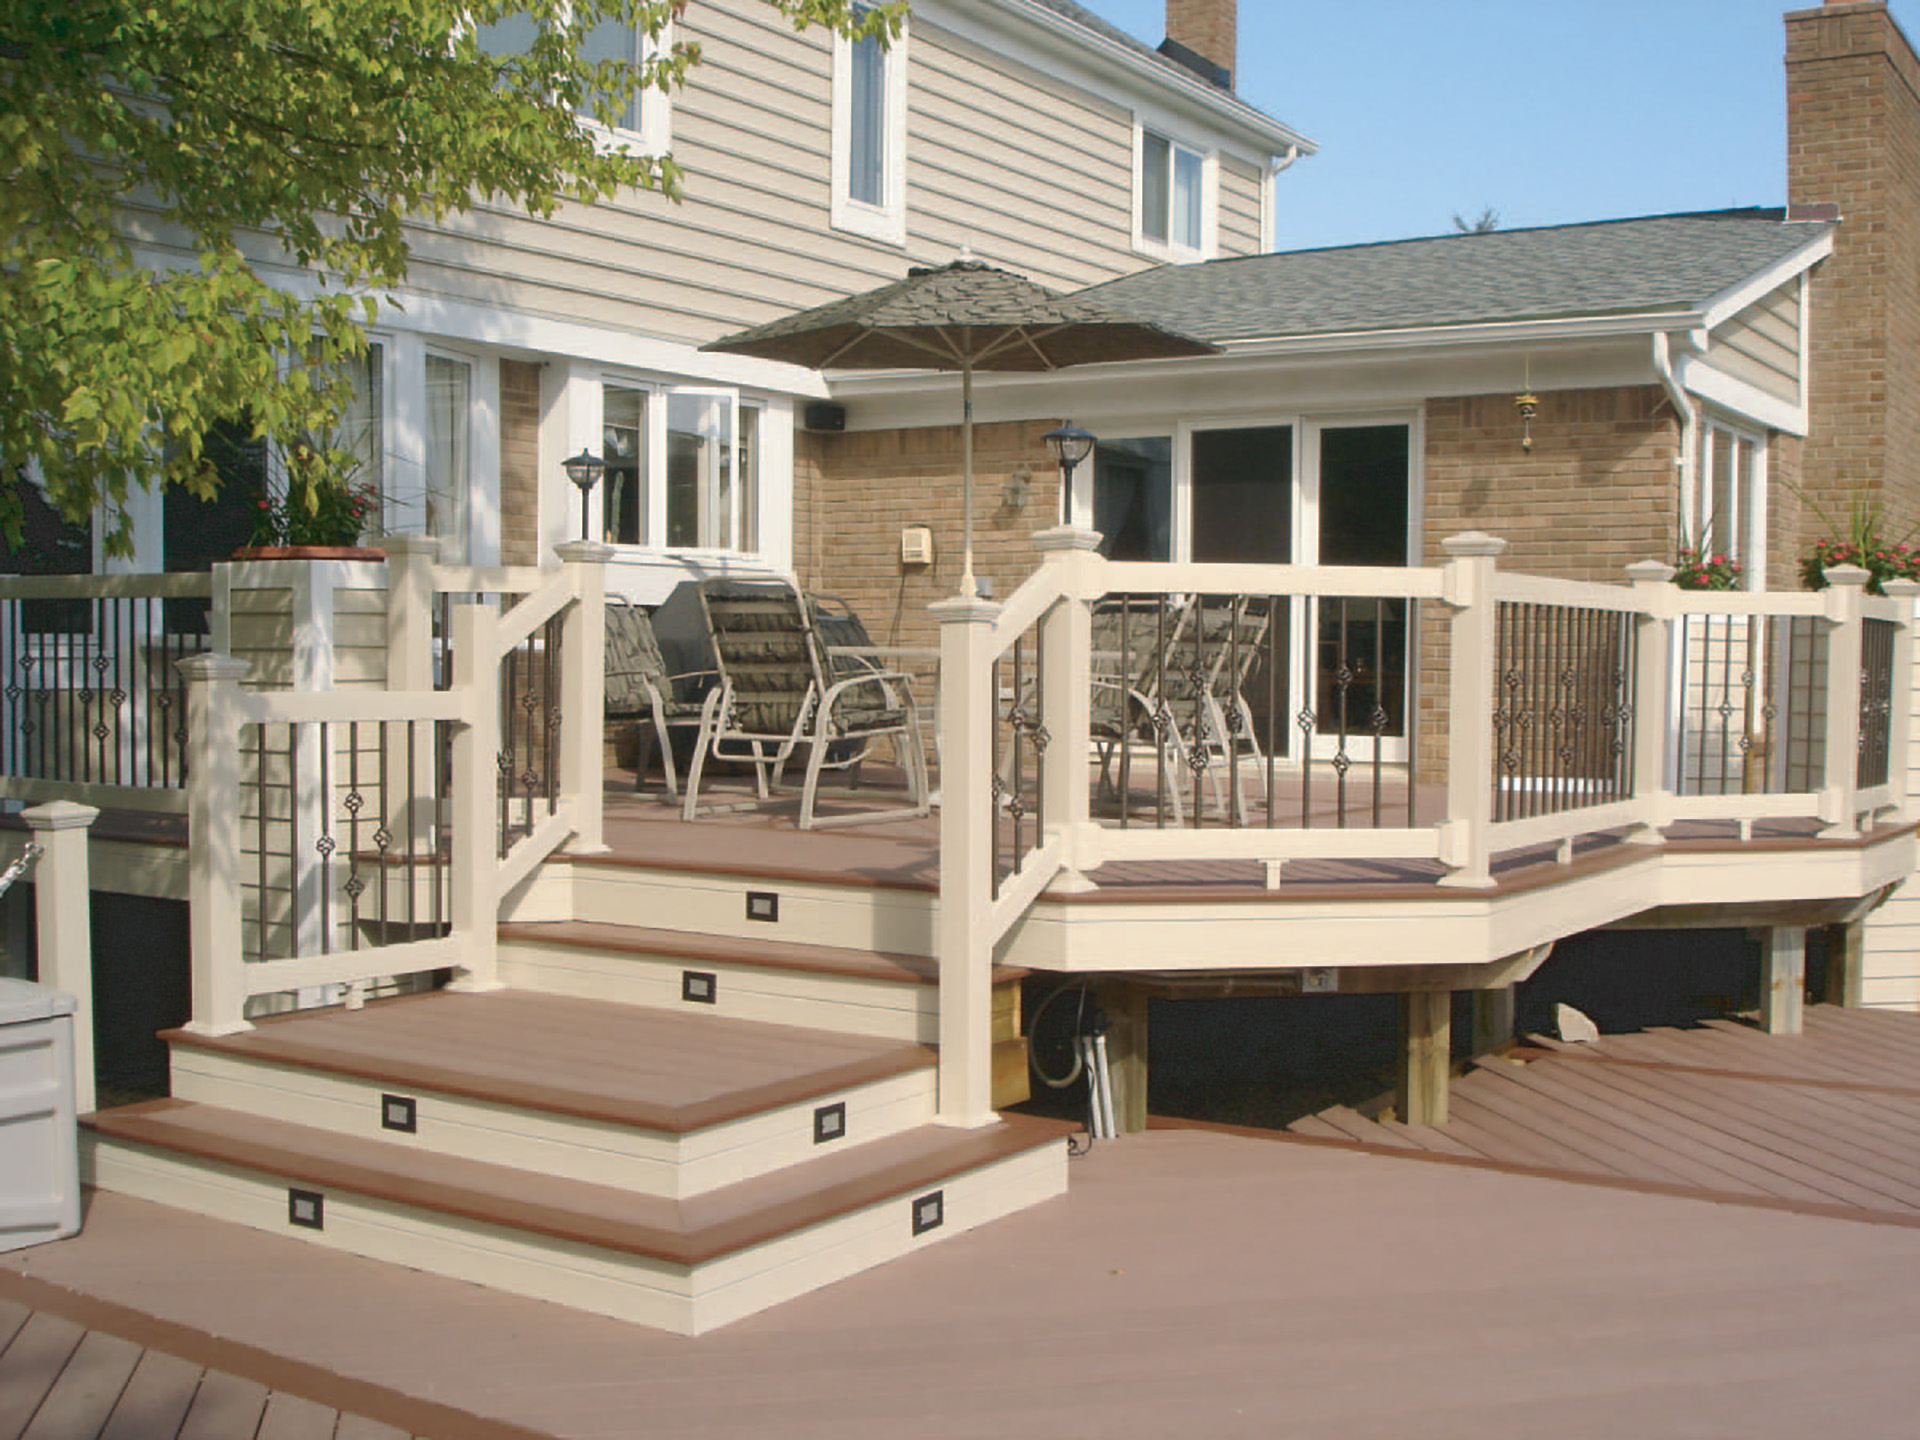 Multilevel composite deck with deck furniture